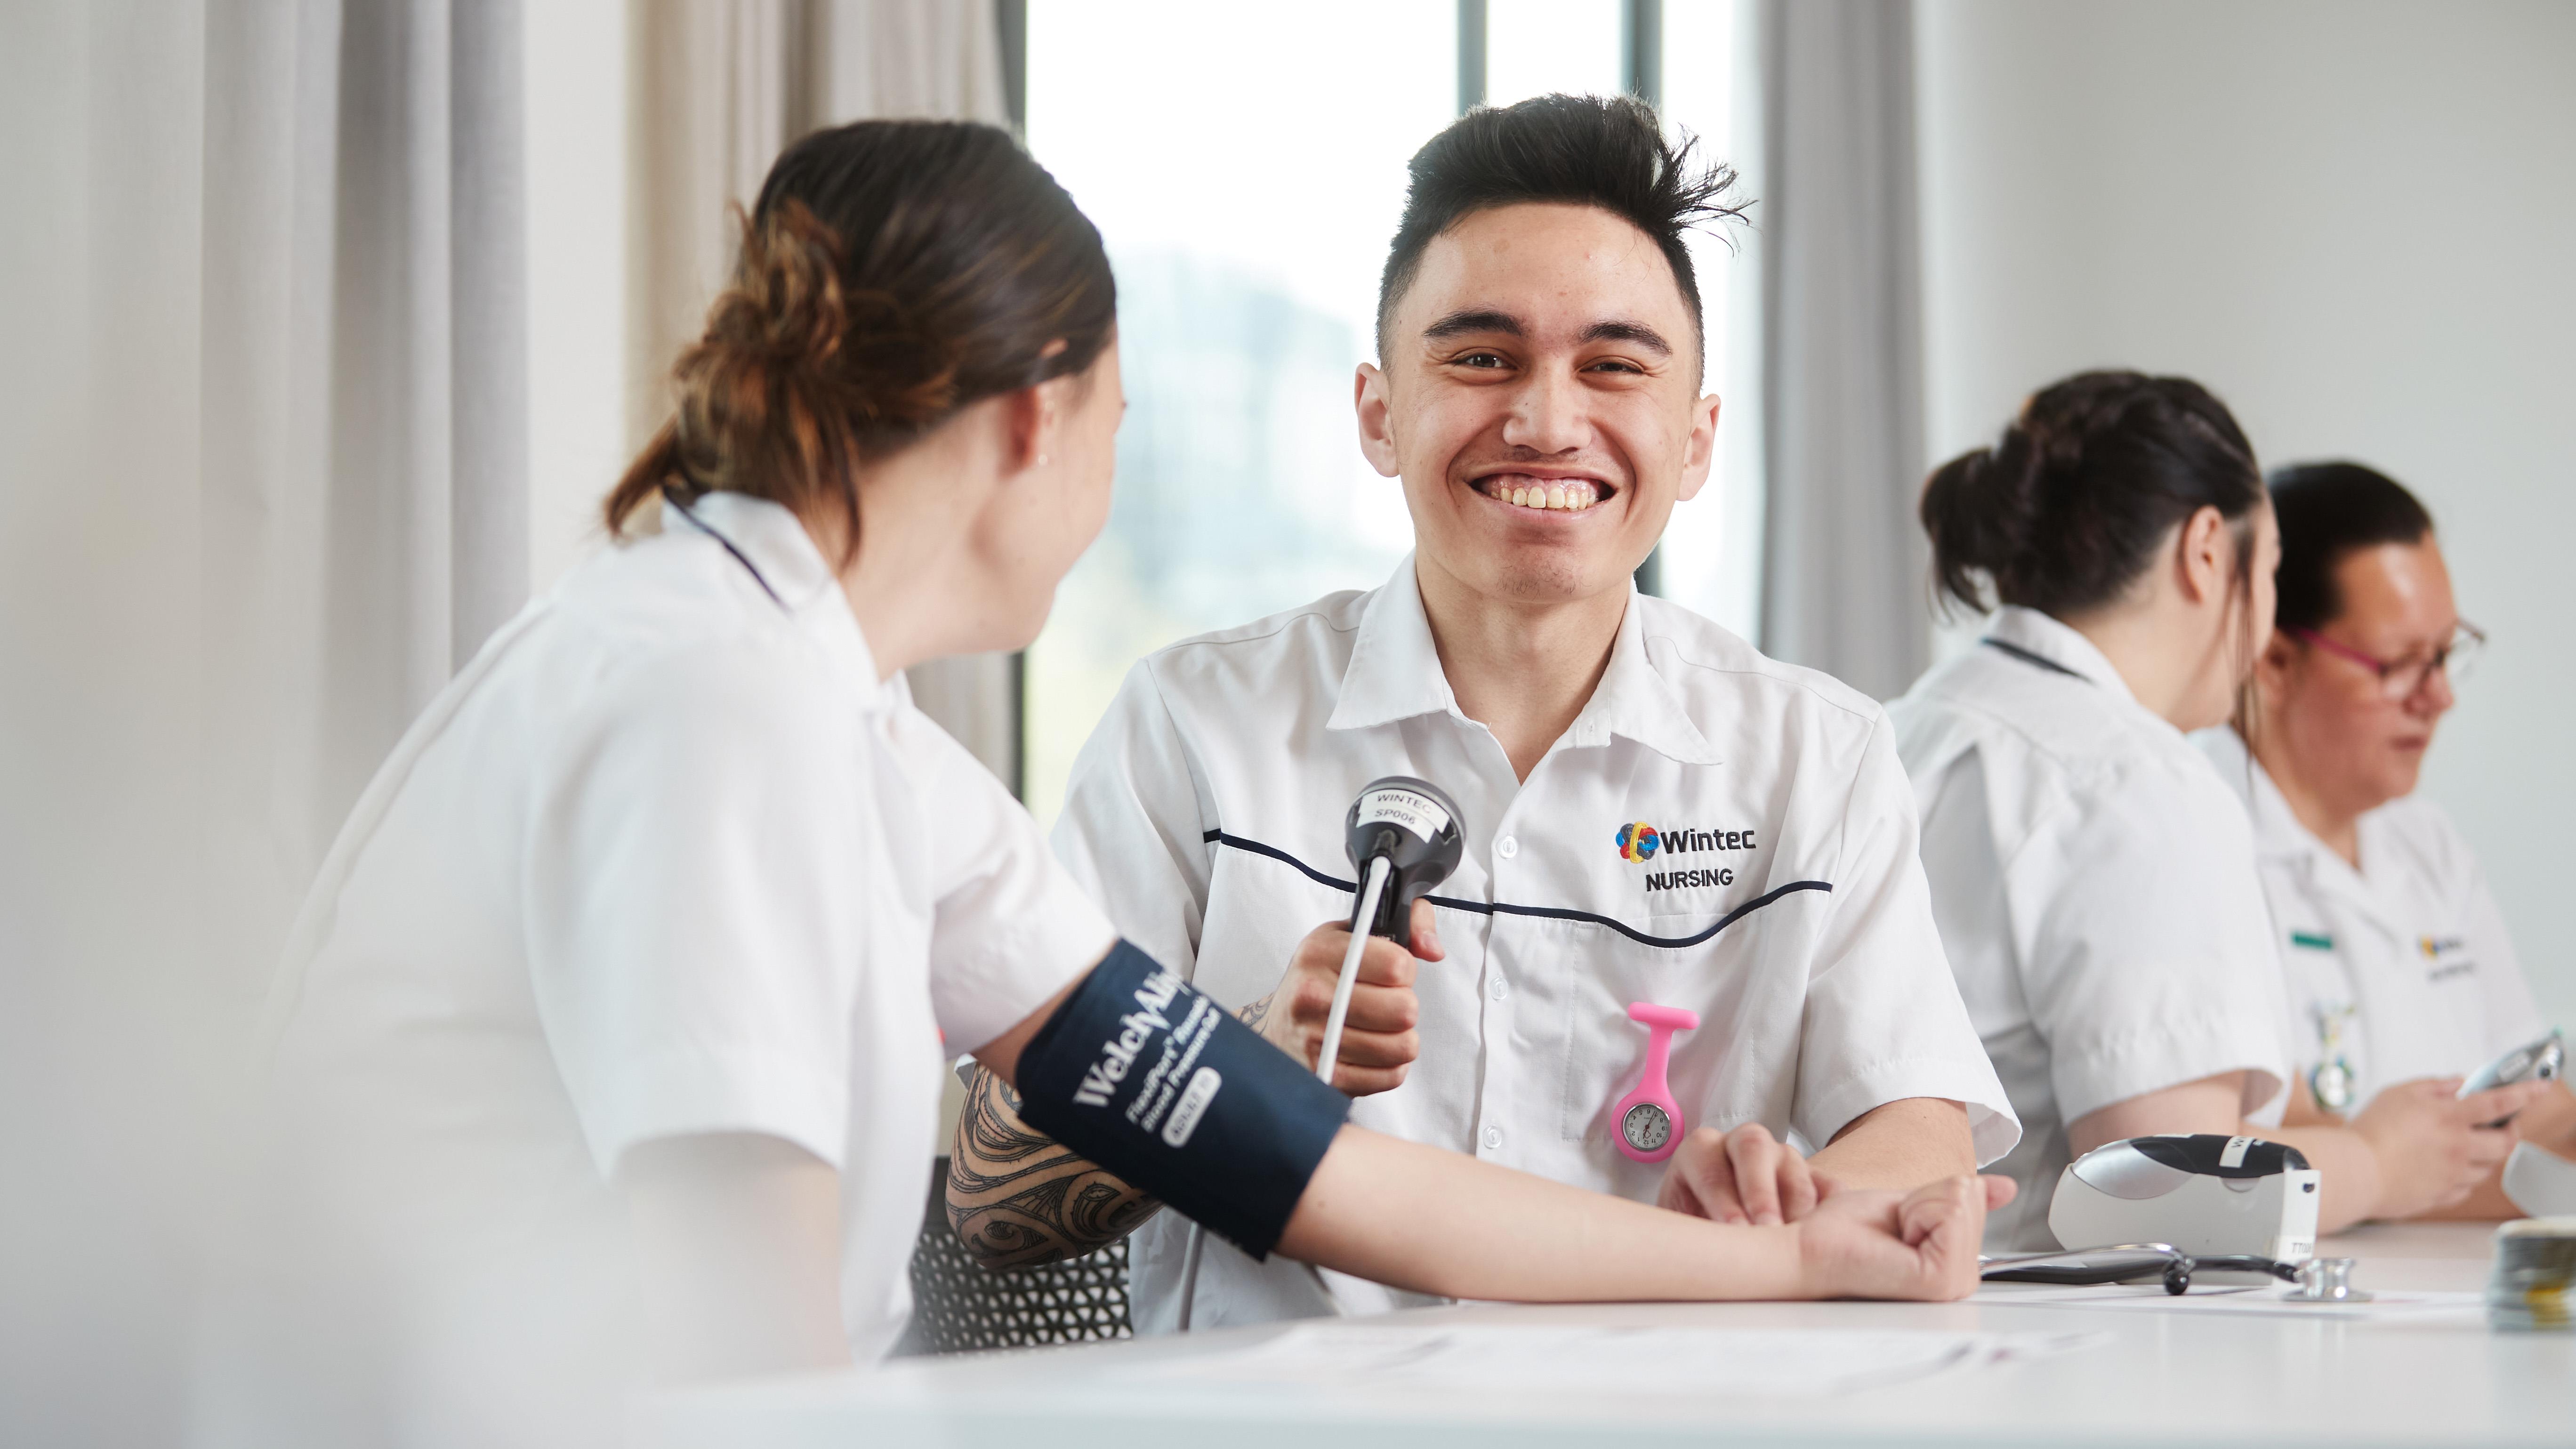 Nursing student taking blood pressure of client